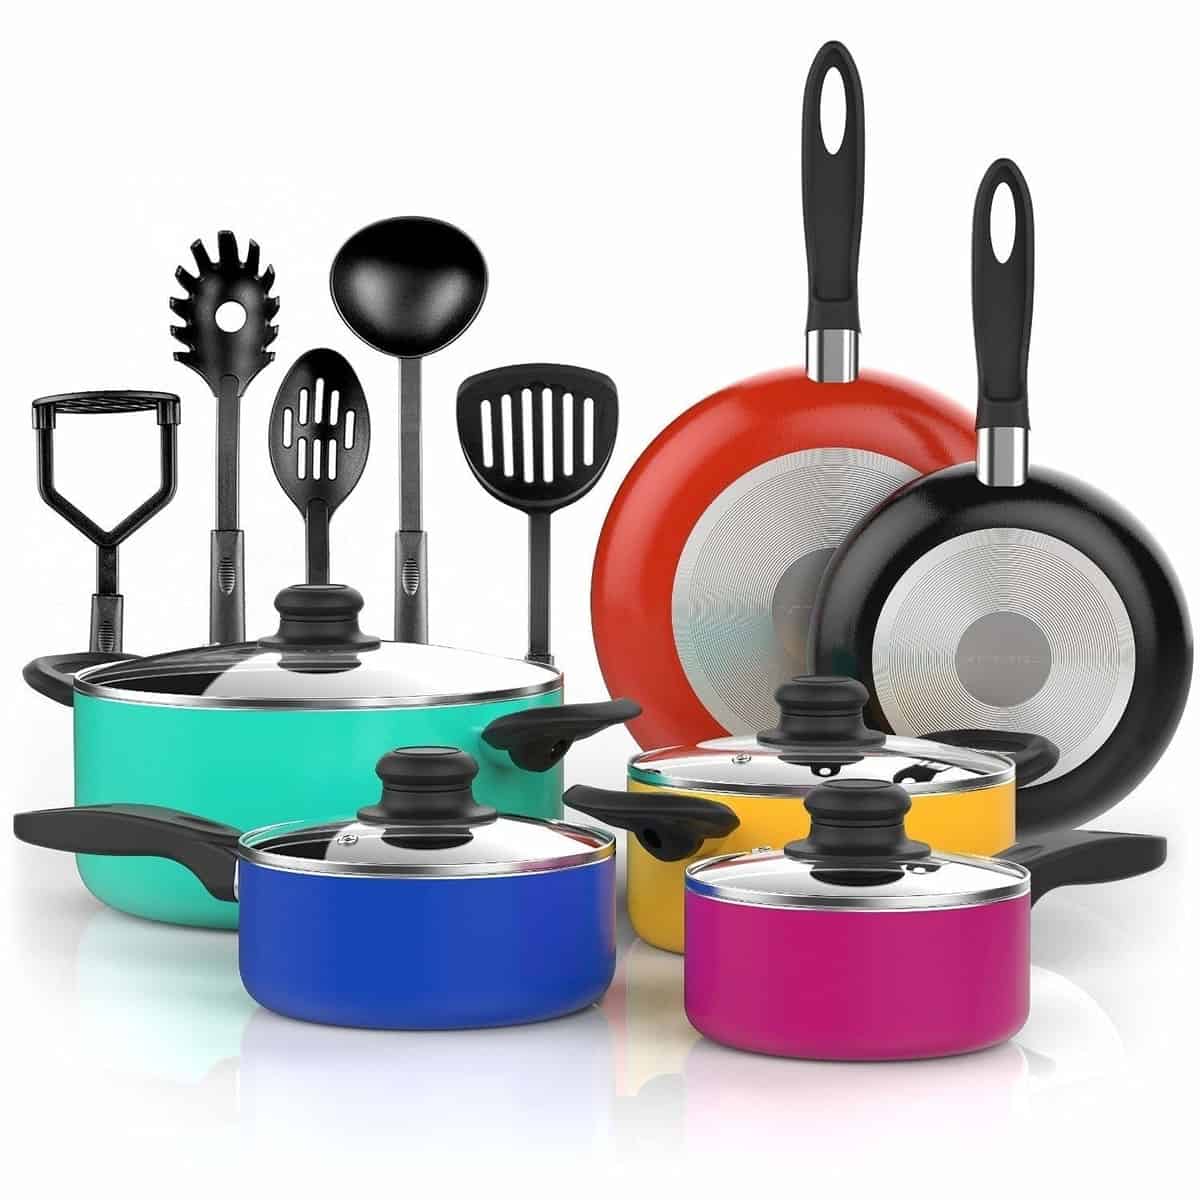 https://static.thedaringkitchen.com/wp-content/uploads/2018/09/Vremi-Nonstick-Gas-Stove-Cookware-Set.jpg